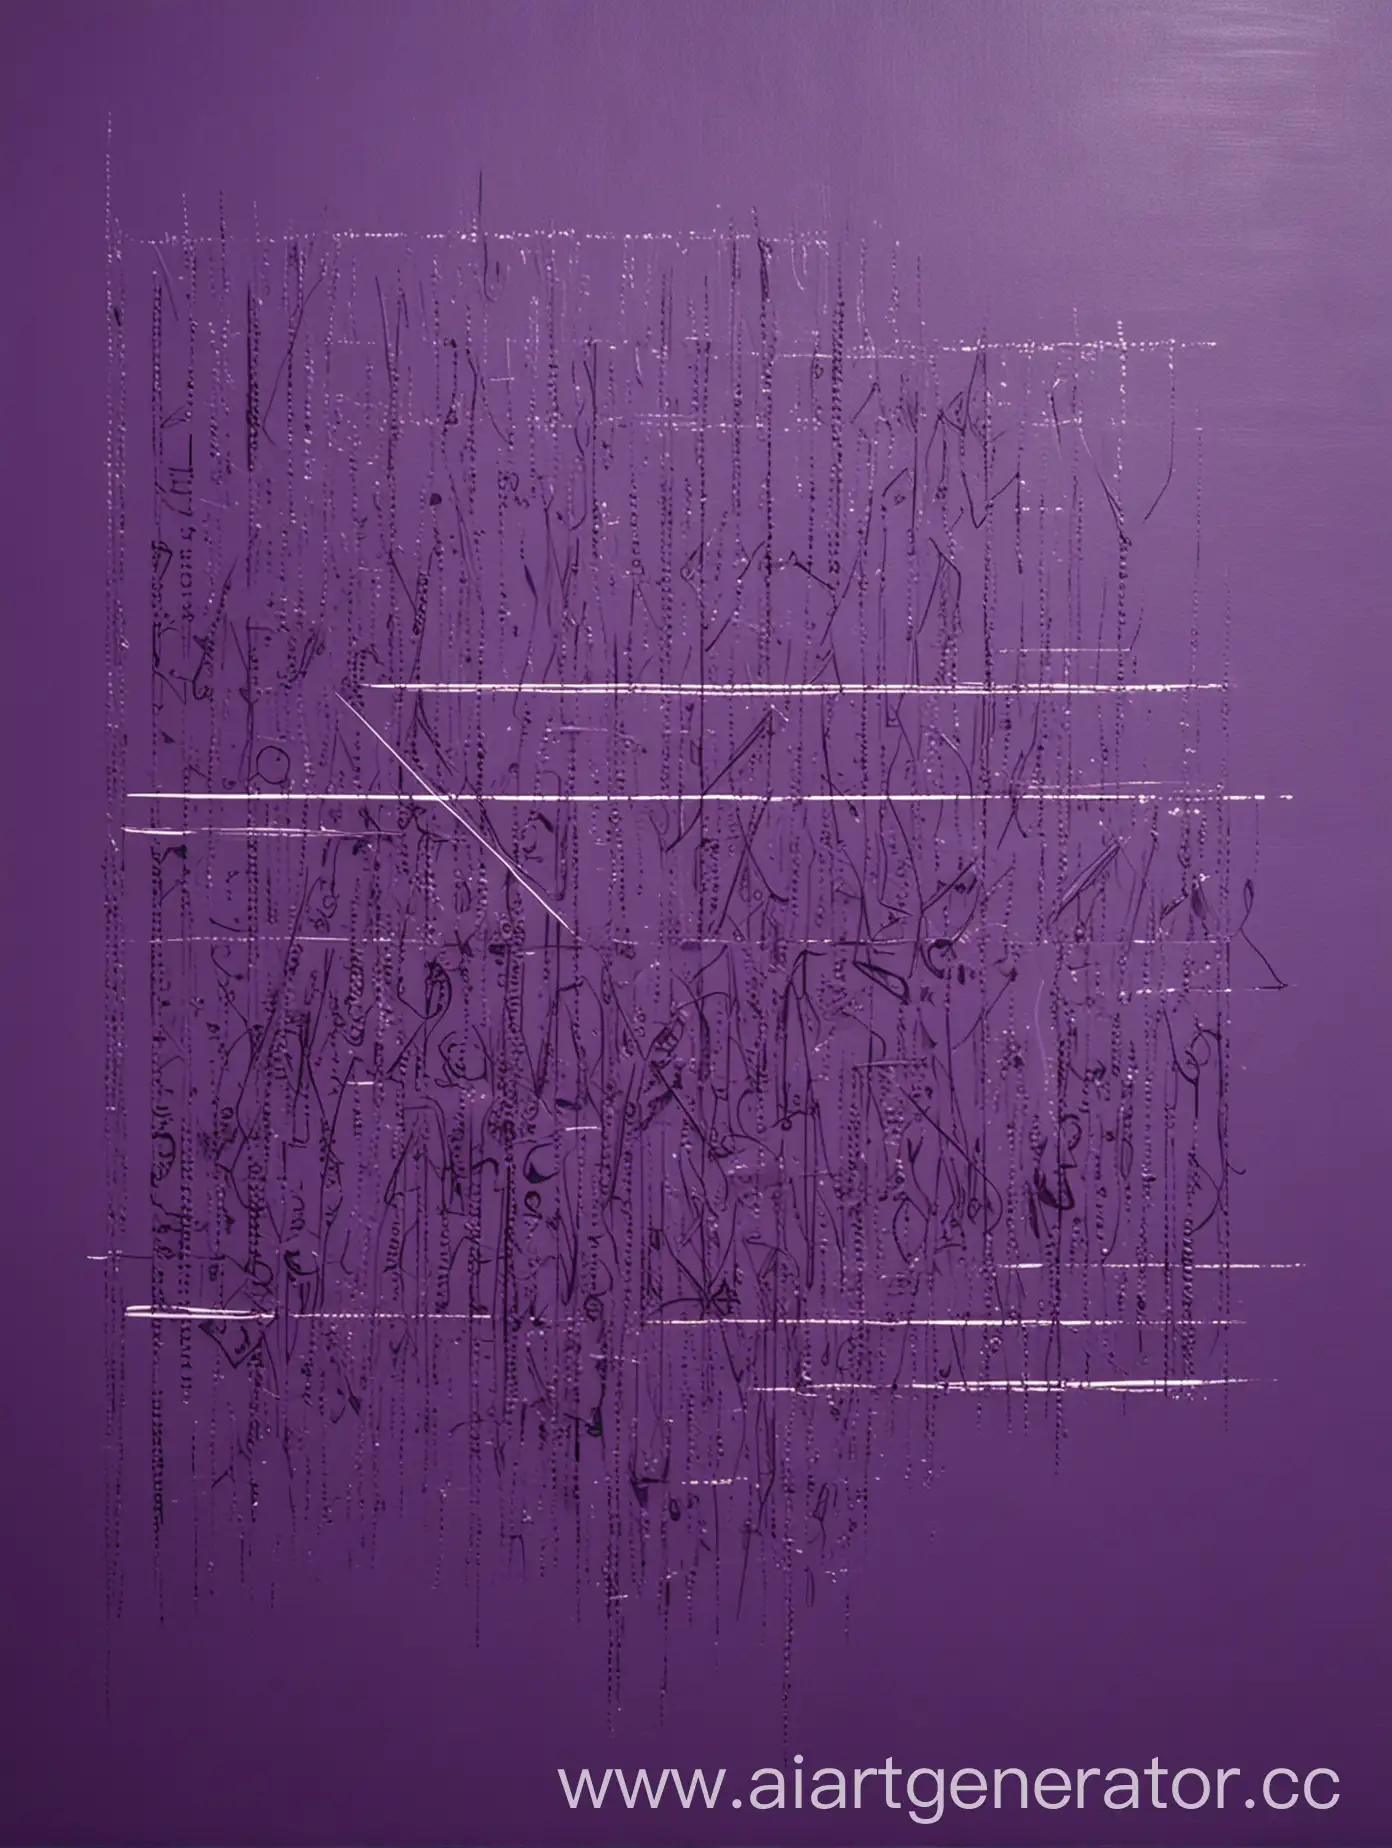 Abstract-Purple-Geometric-Lines-with-Writing-IIMSNII-Artwork